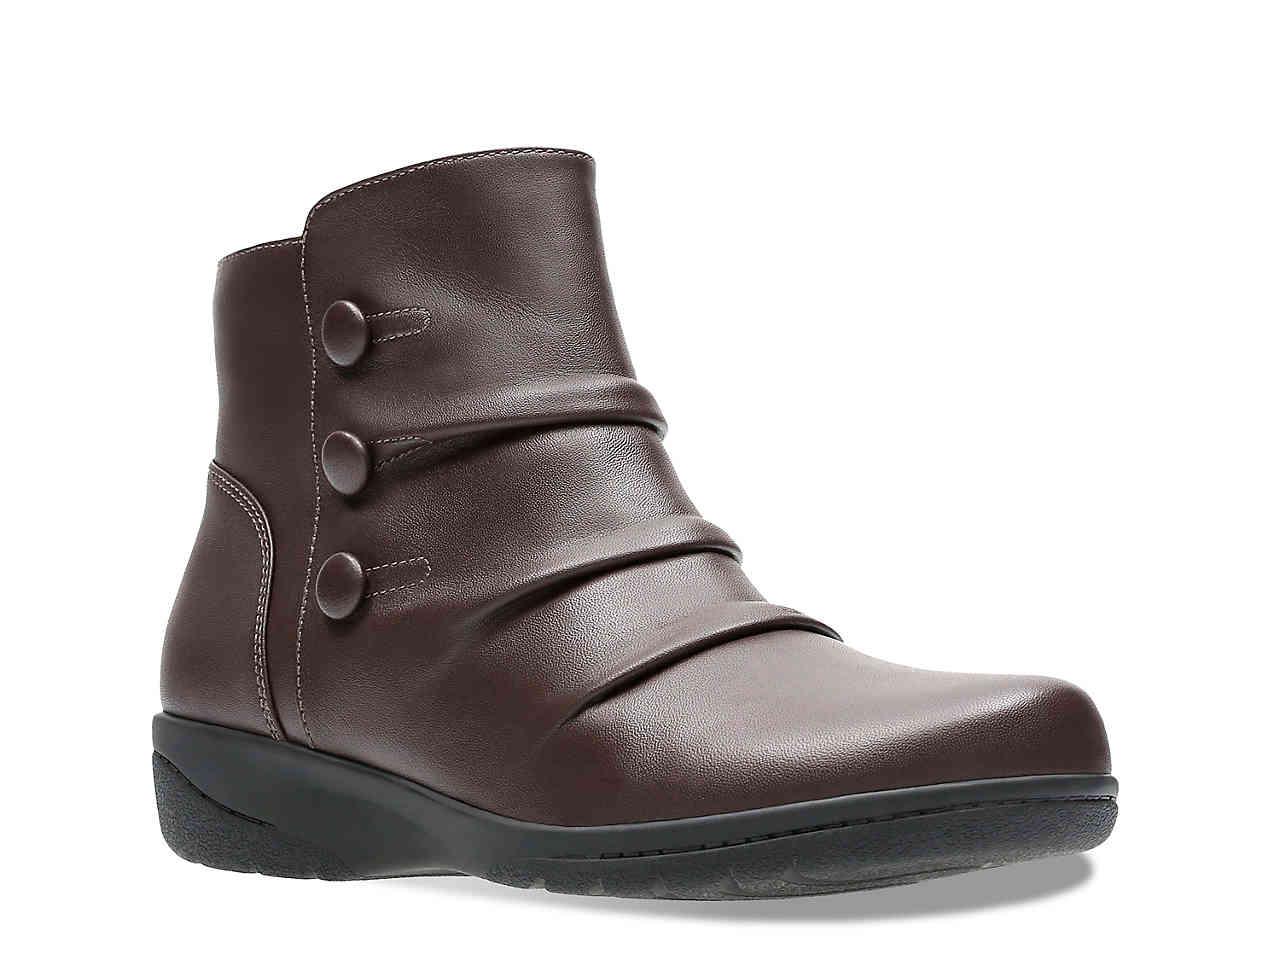 khombu boots price